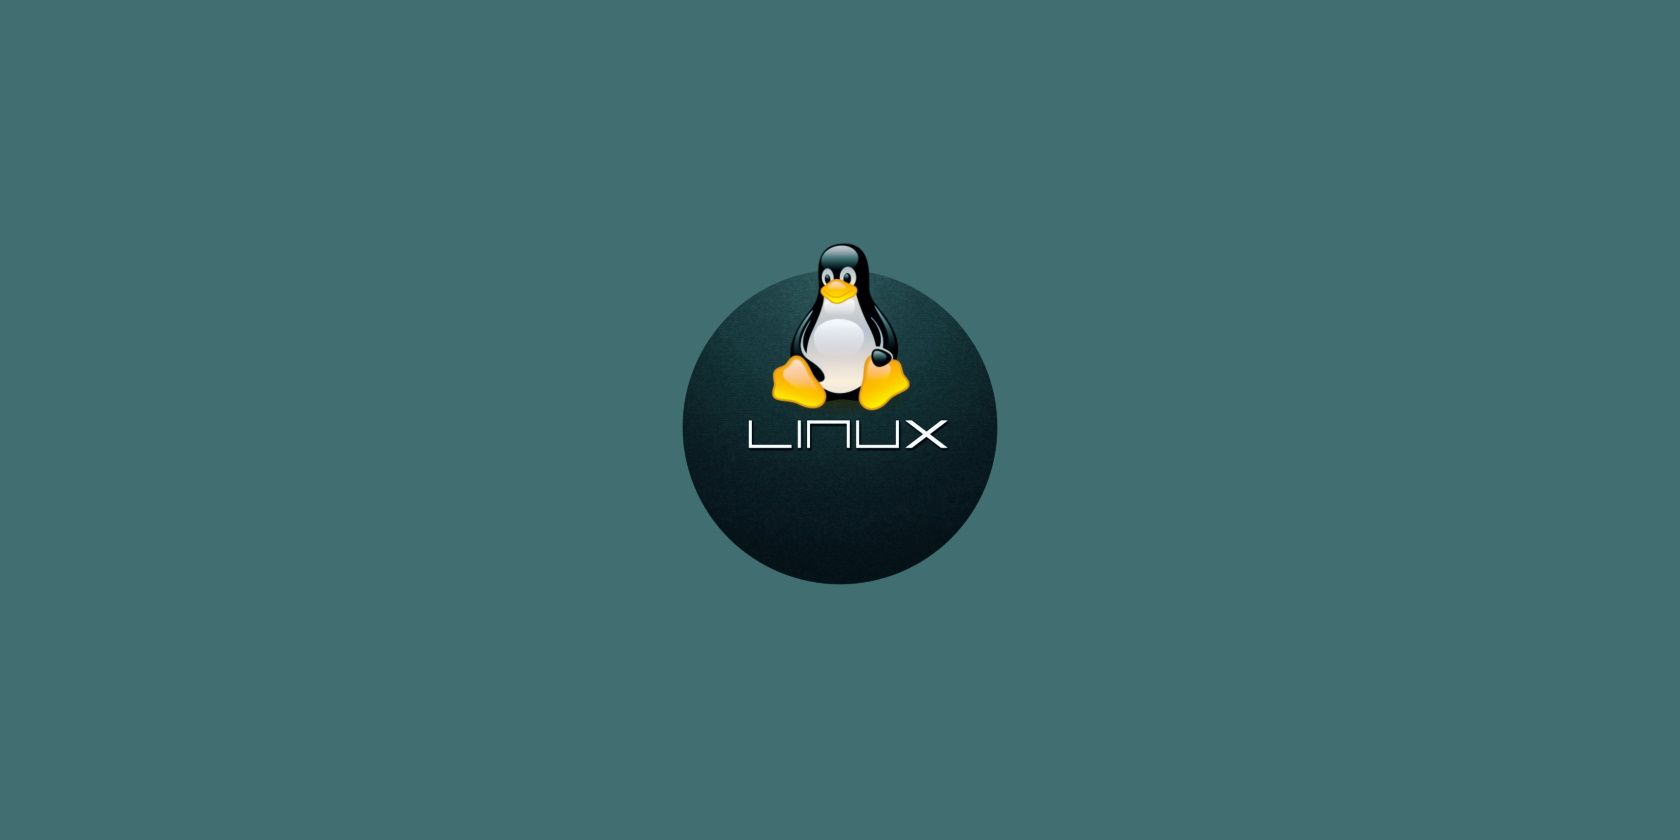 Linux tux logo on a Desktop